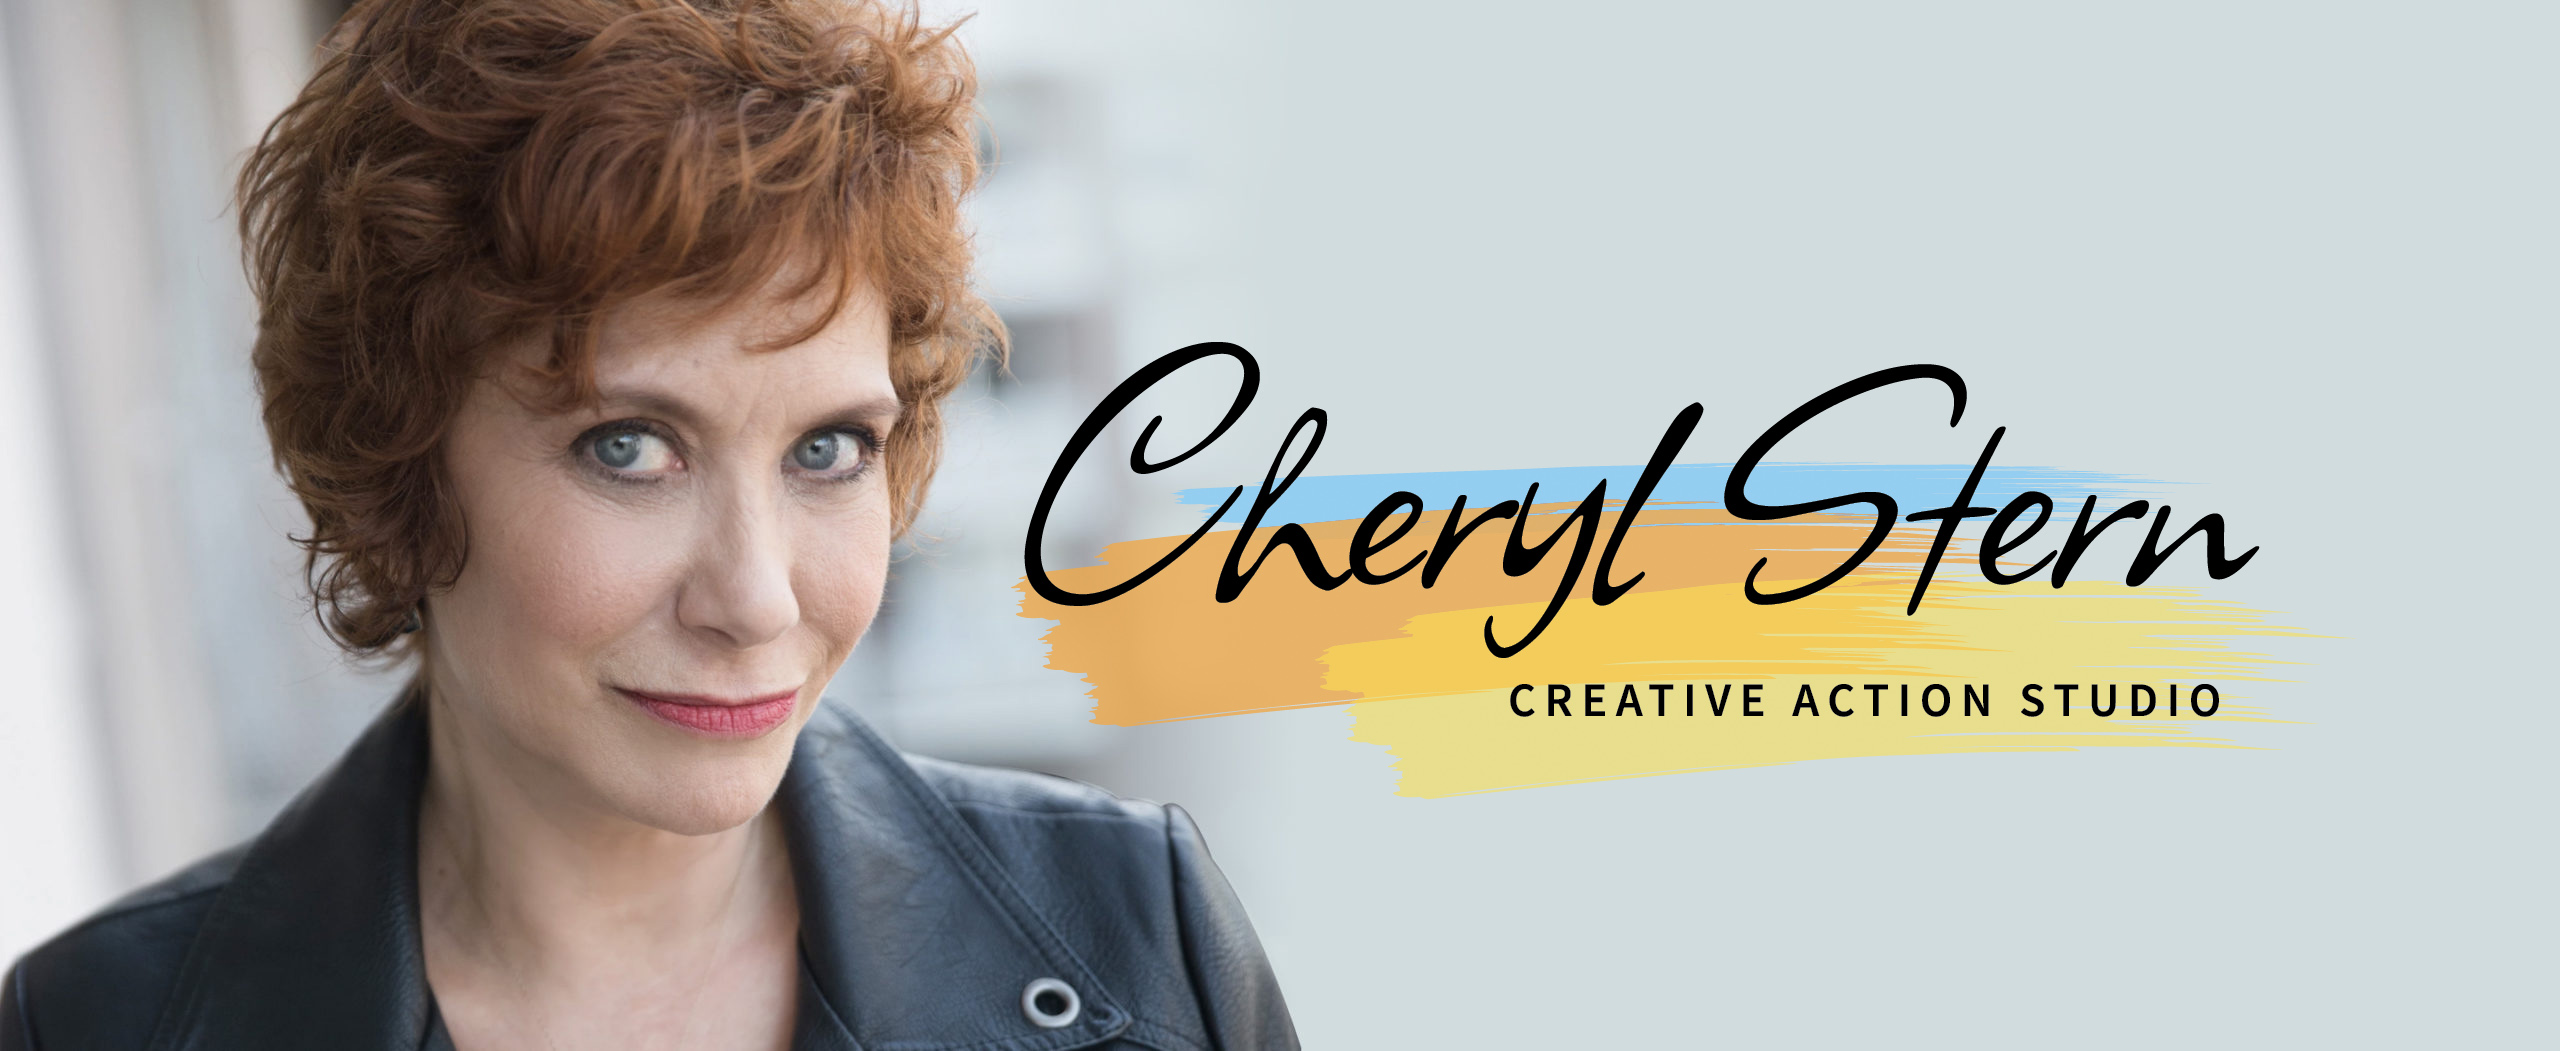 cheryl stern creative action studio